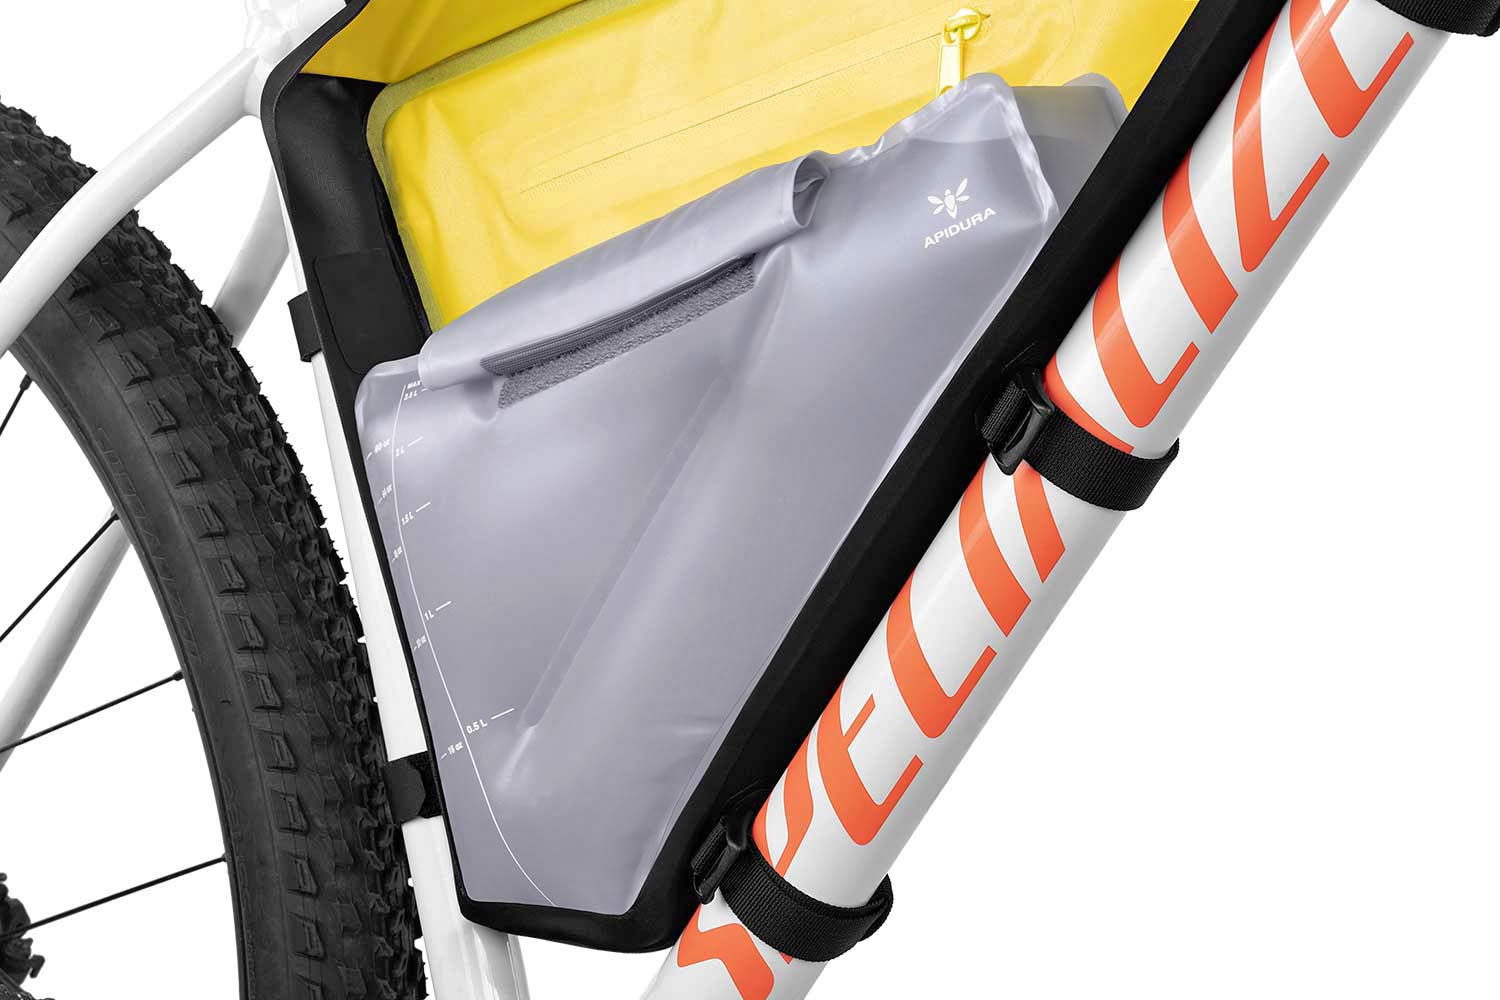 Apidura 3L Hydration Bladder for bikepacking packs, inside cutaway